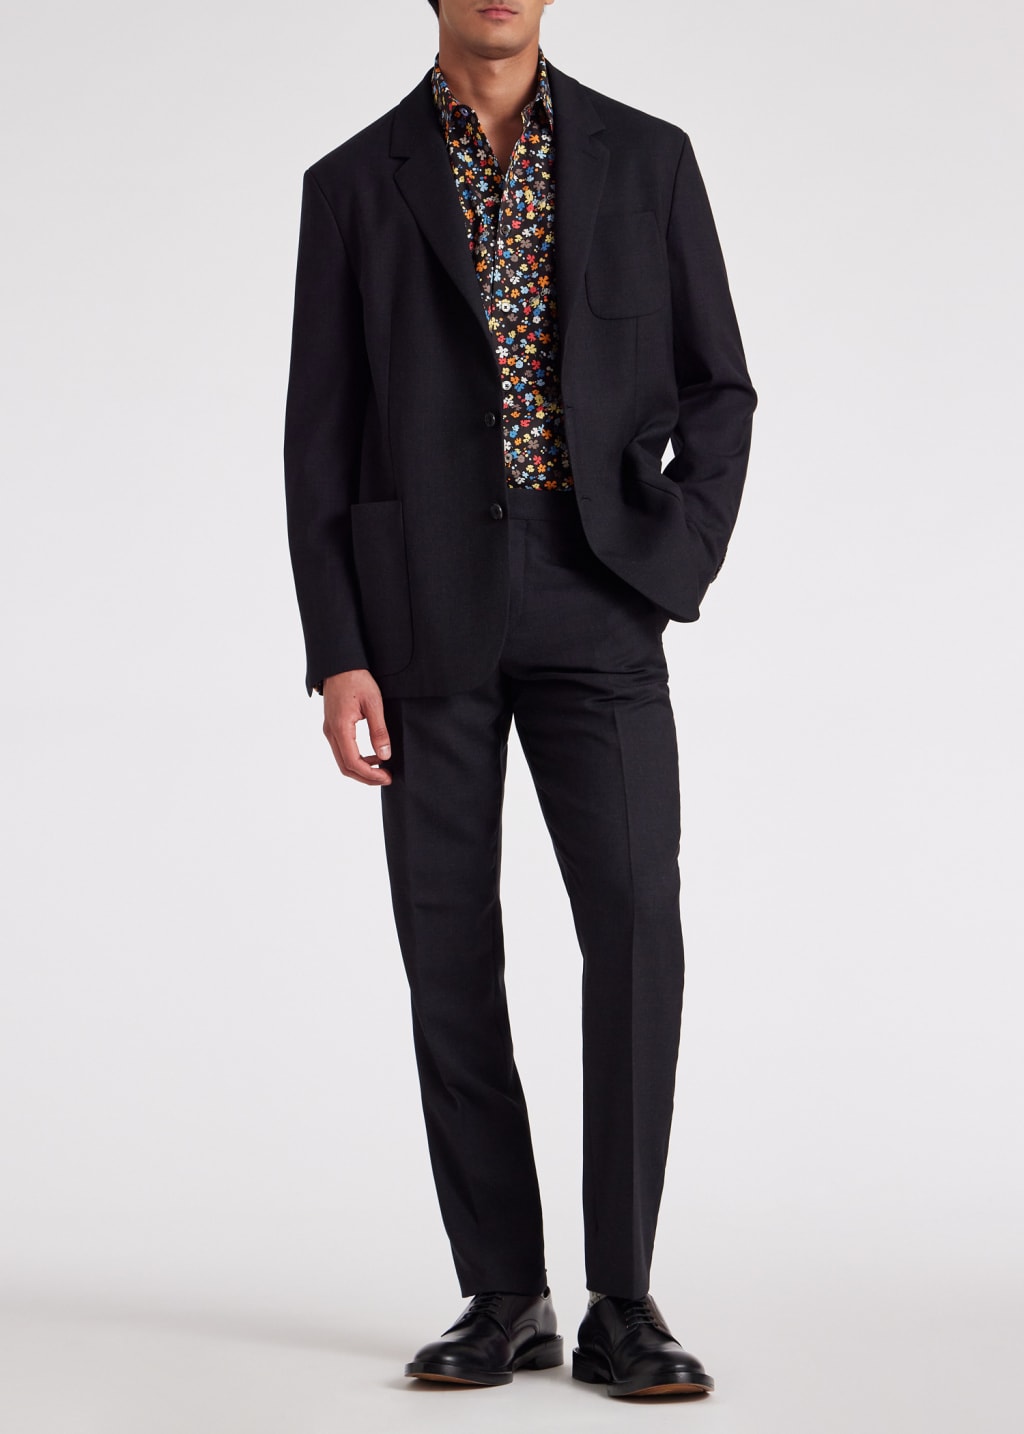 Model View - Black Floral Regular-Fit Cotton Shirt Paul Smith